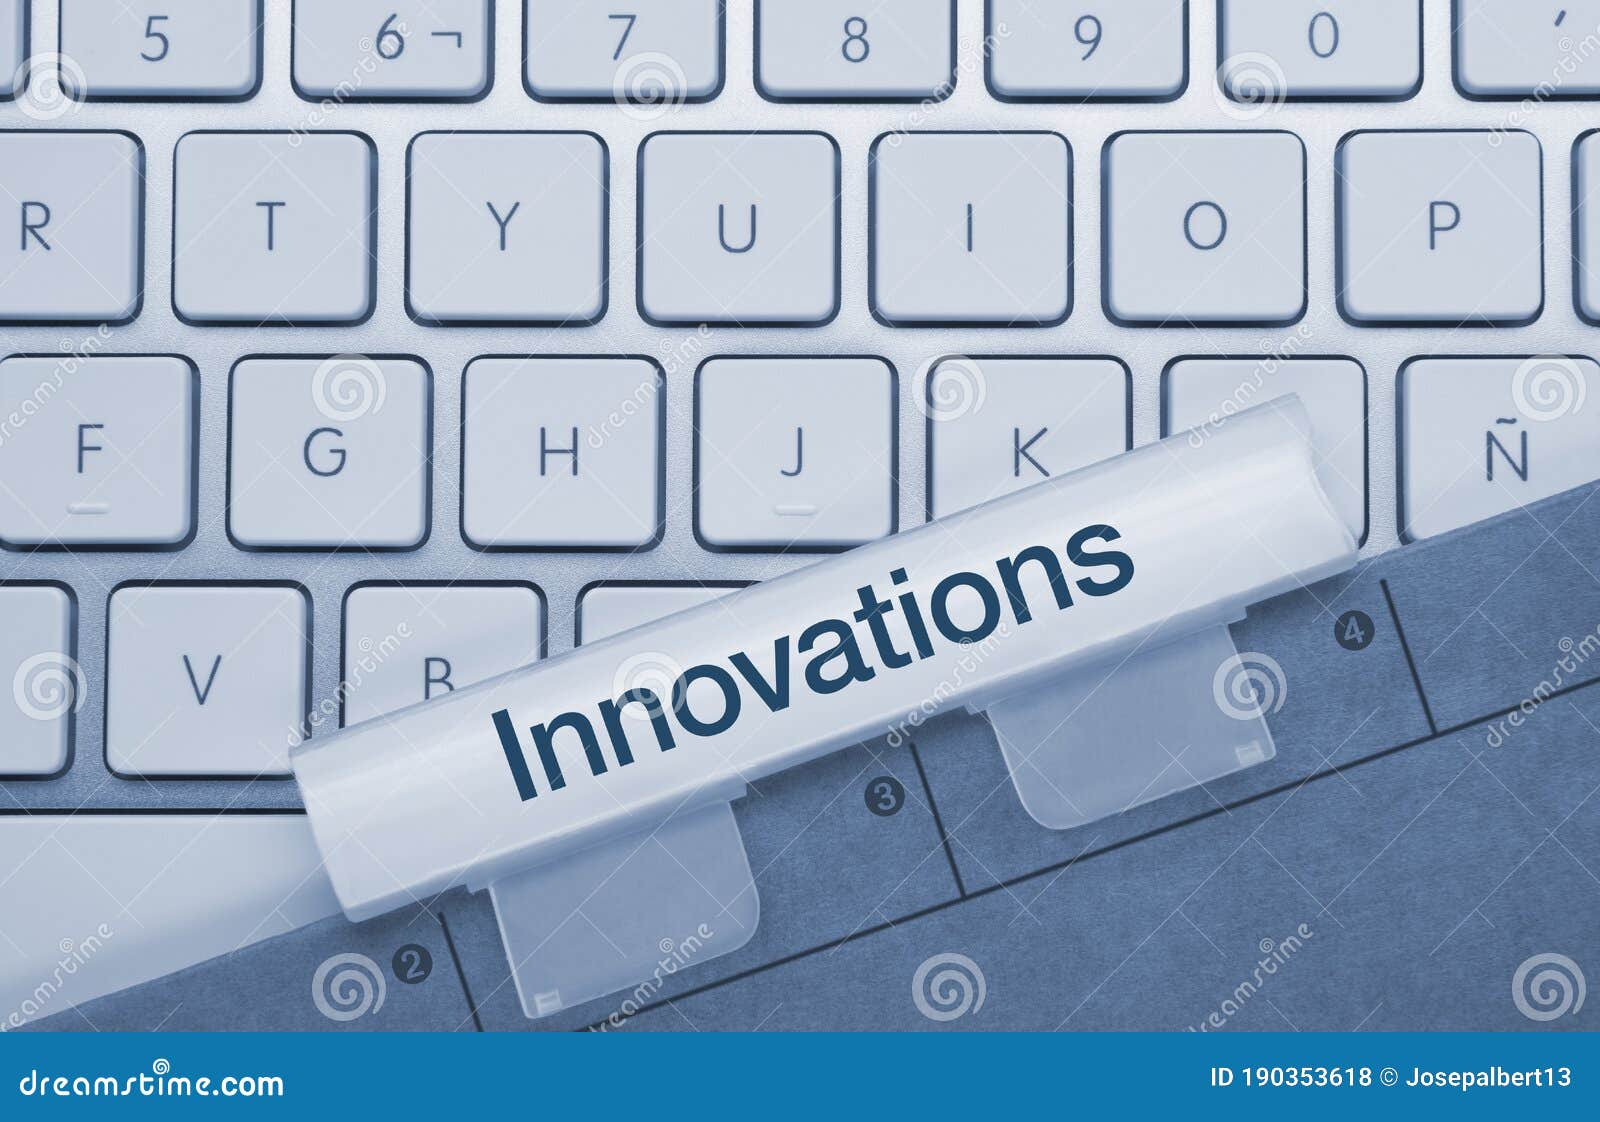 innovations - inscription on blue keyboard key